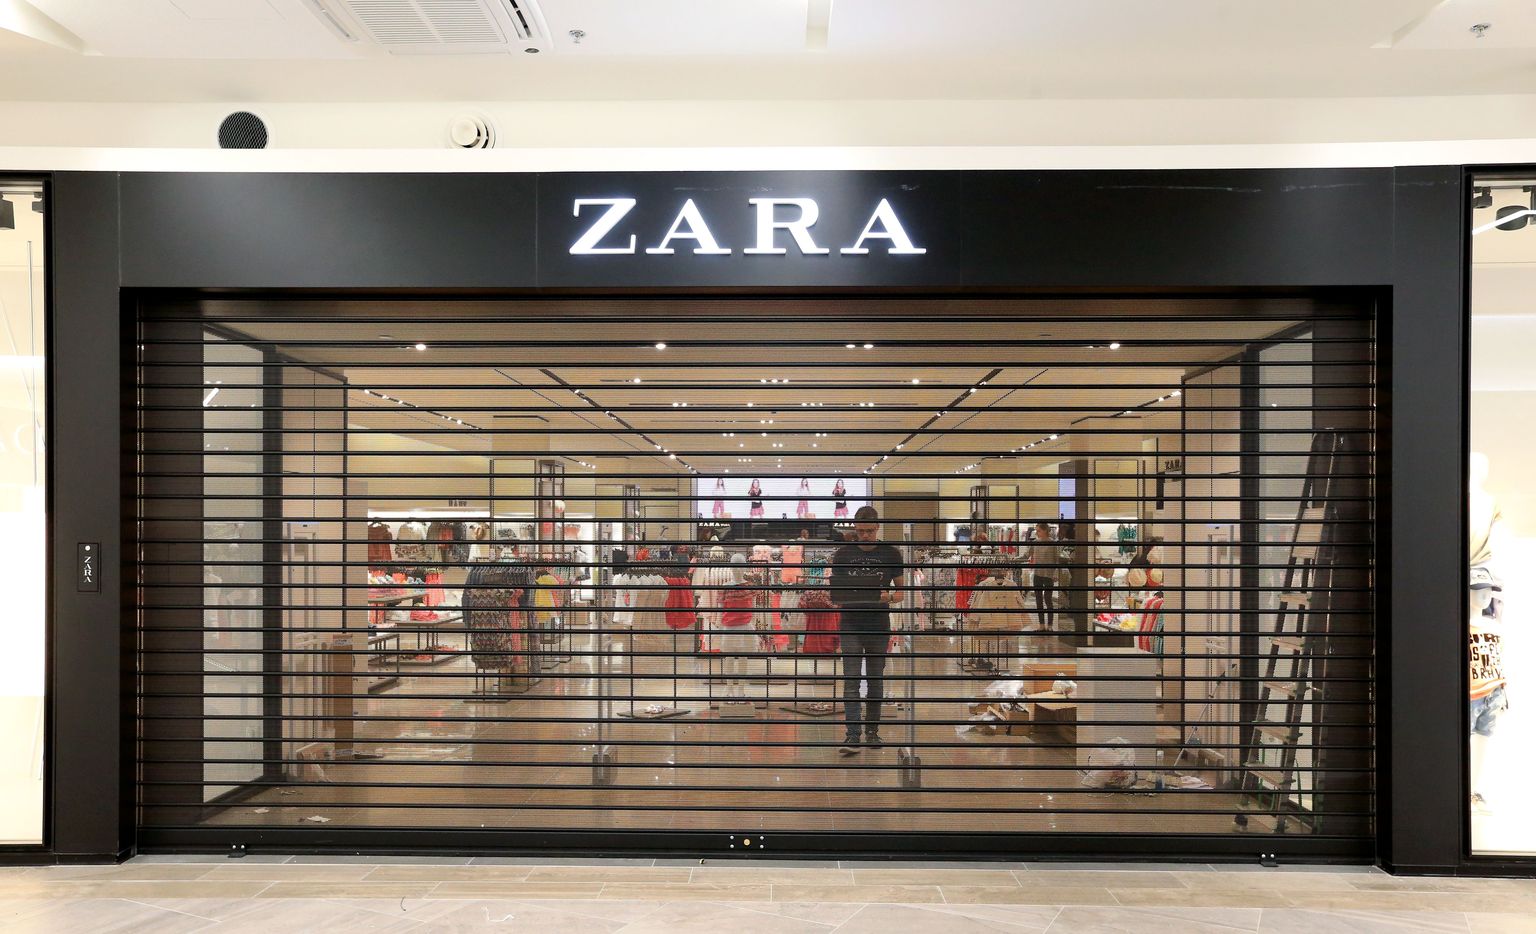 Rõivakontsern Apranga müüb Baltikumis Zara tooteid.